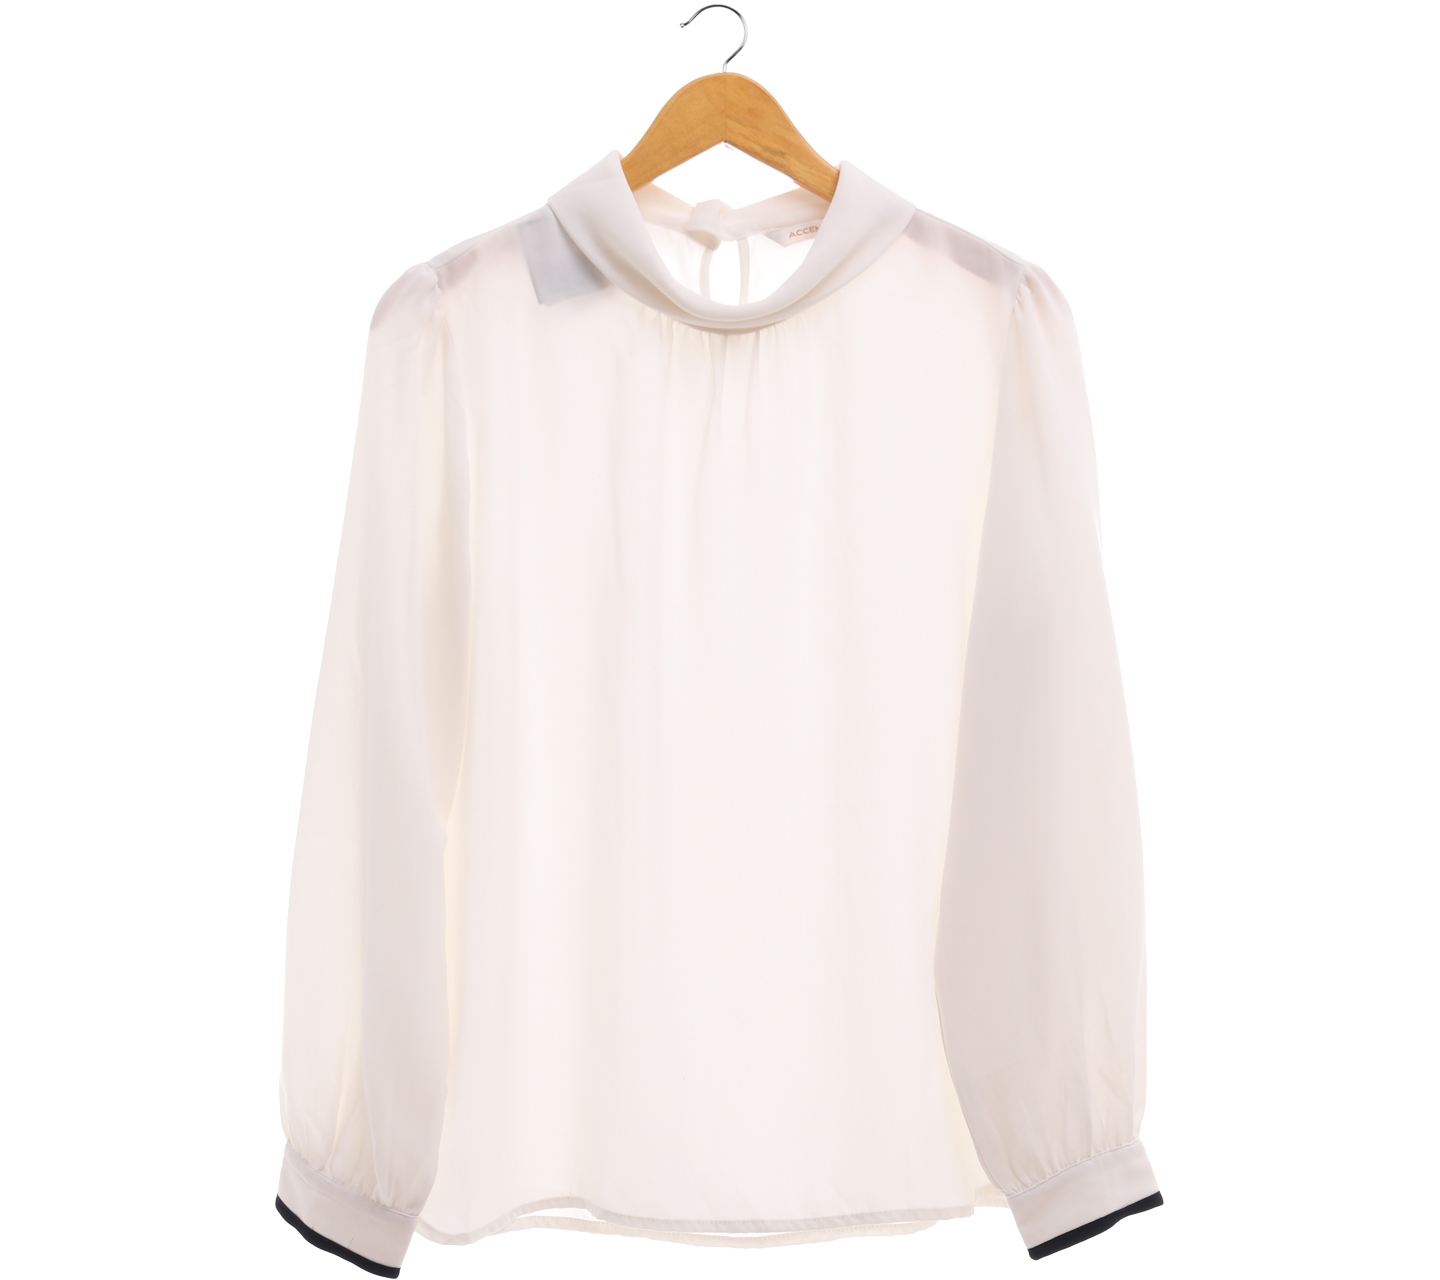 Accent turtleneck white blouse